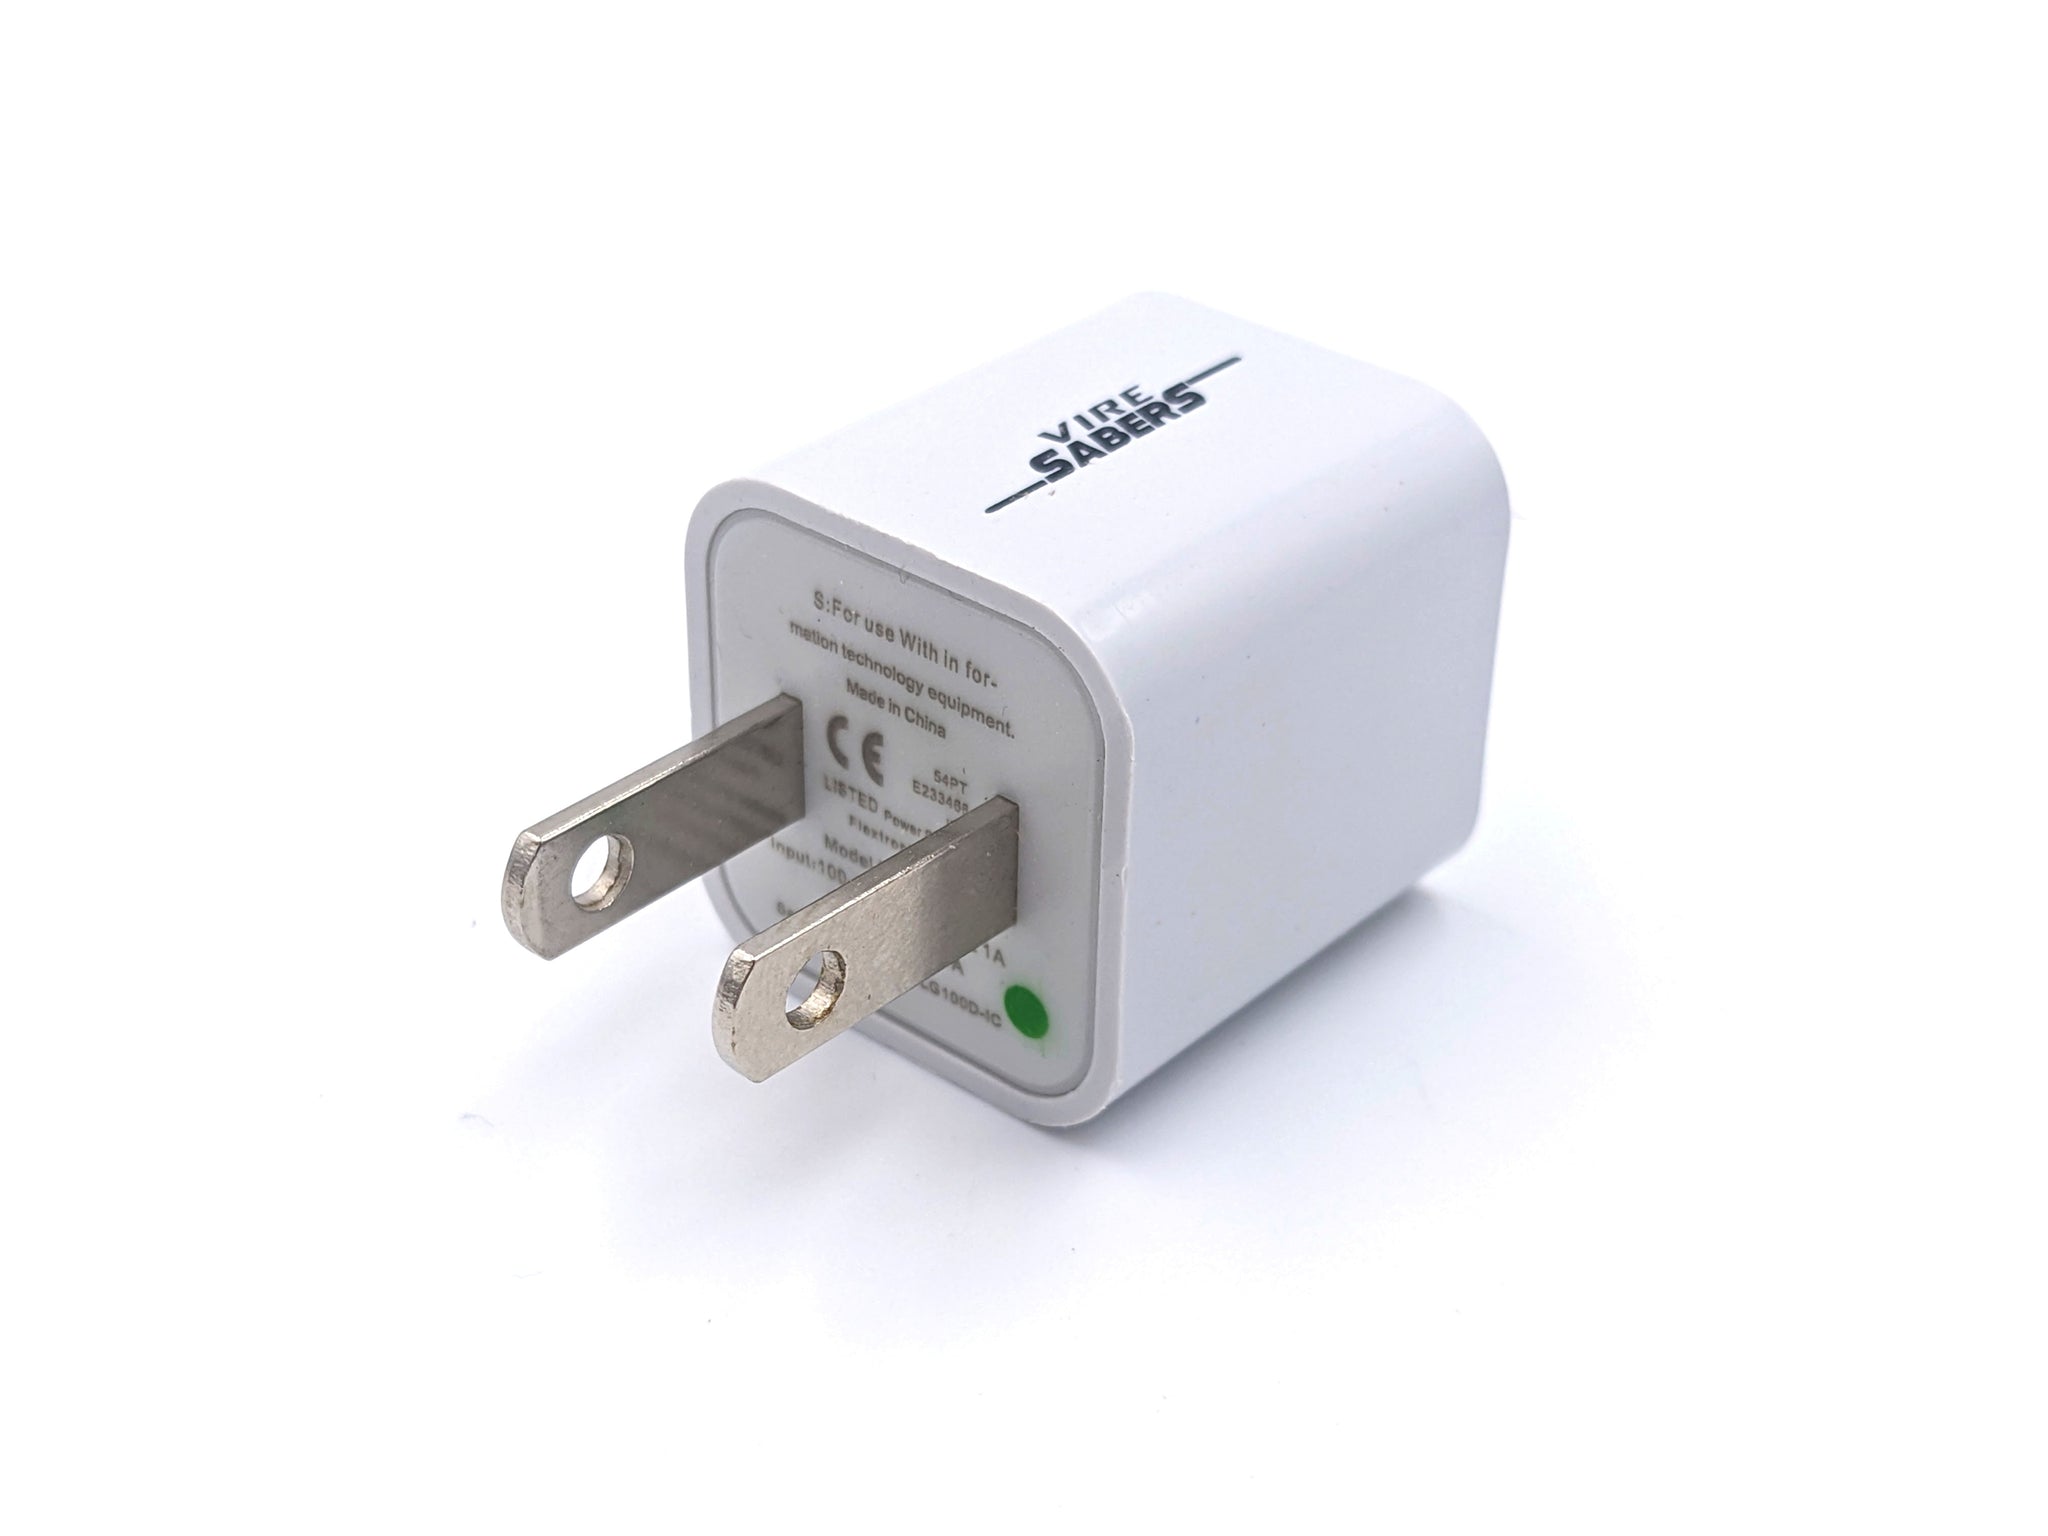 Párrafo Deslumbrante Contradecir 5v 1A USB Charging Block (US plug) – Vire Sabers